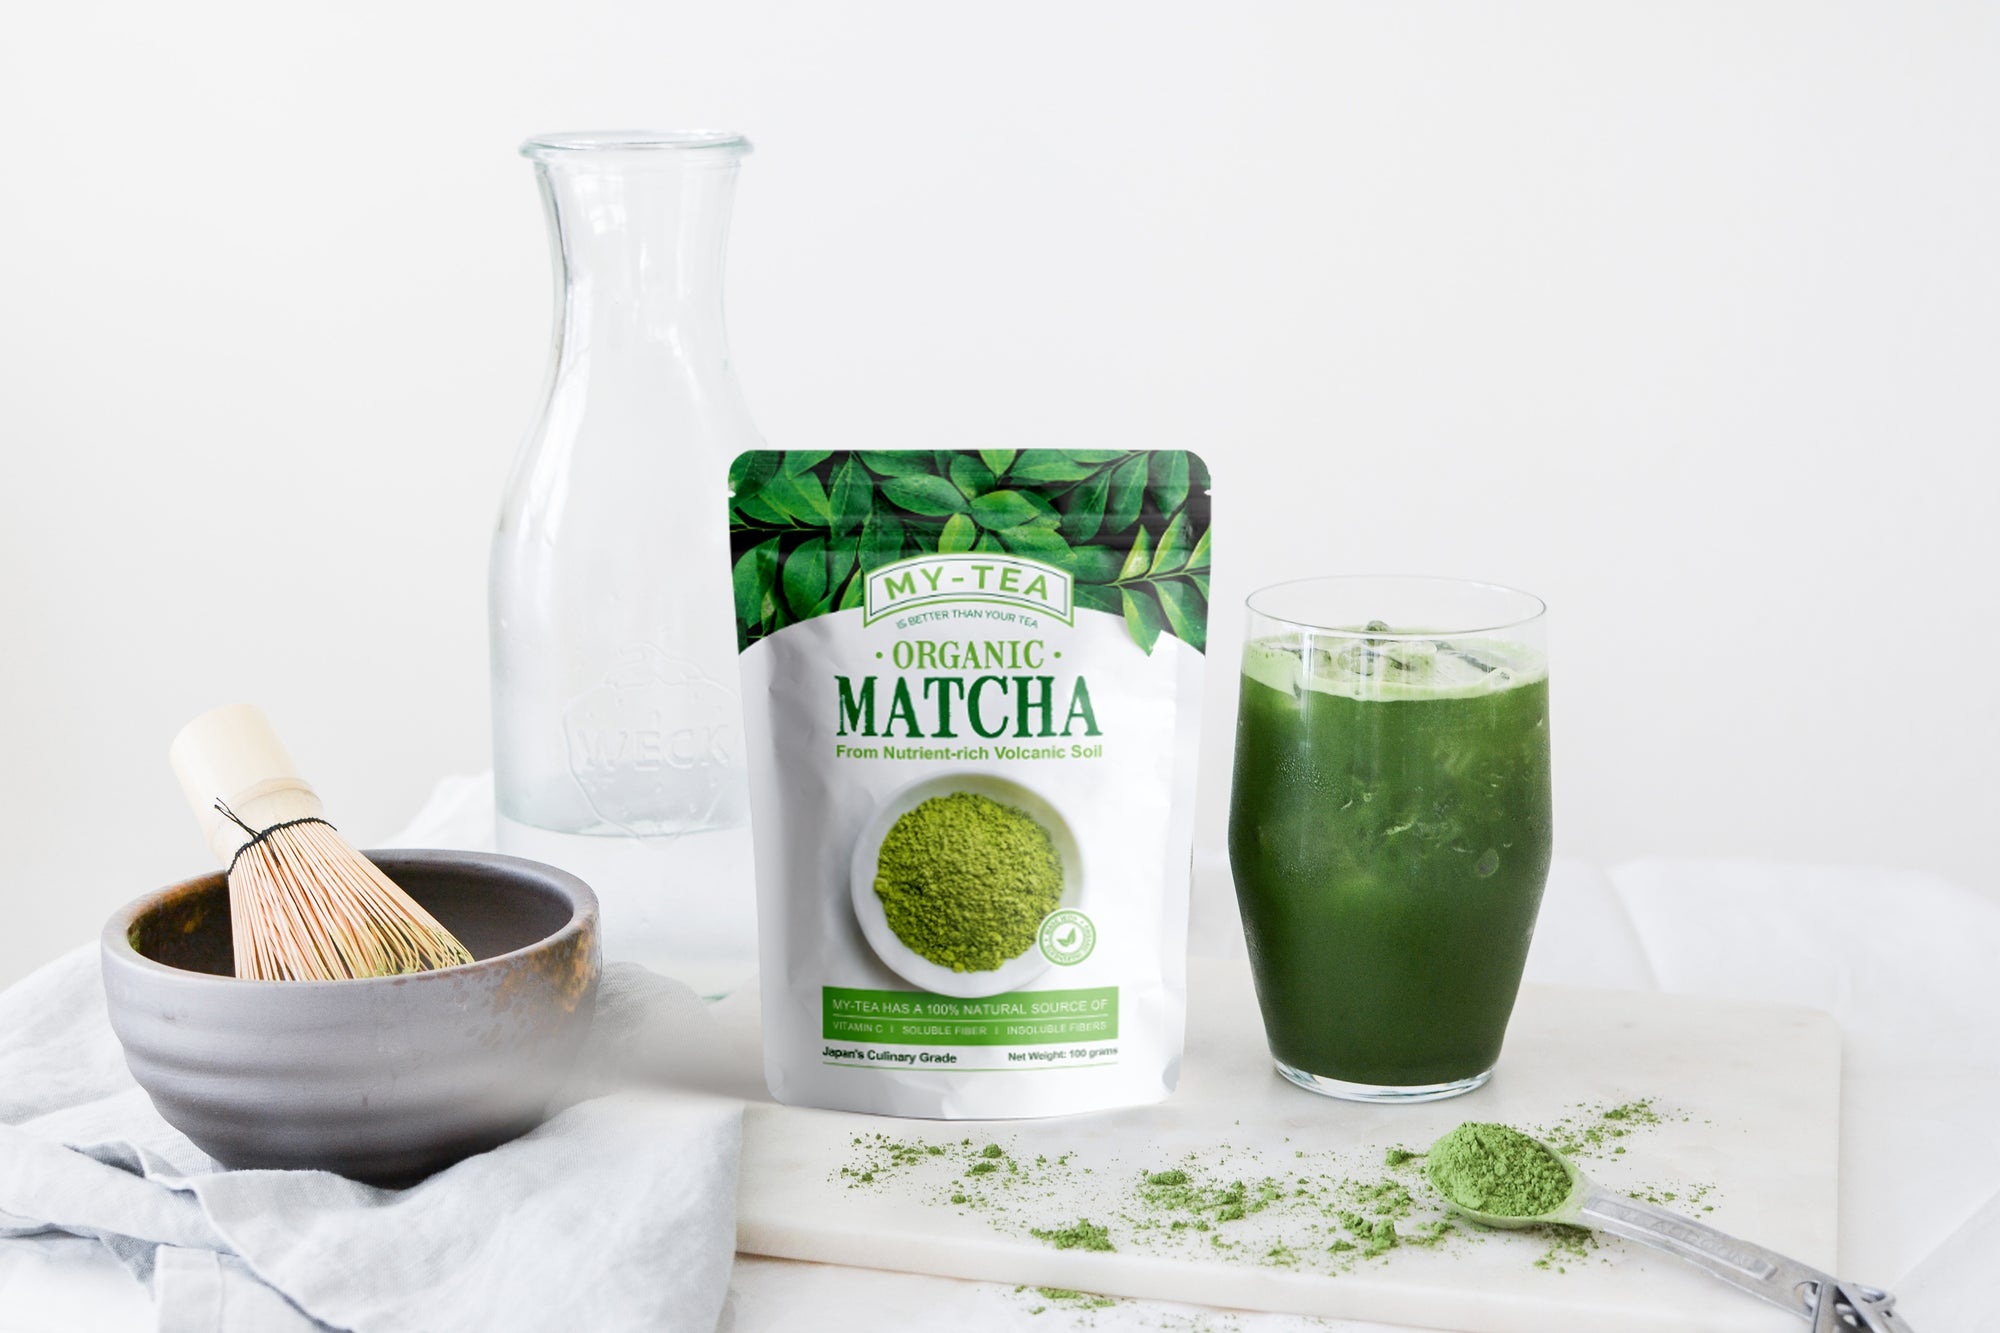 SKINNY MATCHA - Skinny Mi Tea 100% Green Tea Matcha Powder - Burn